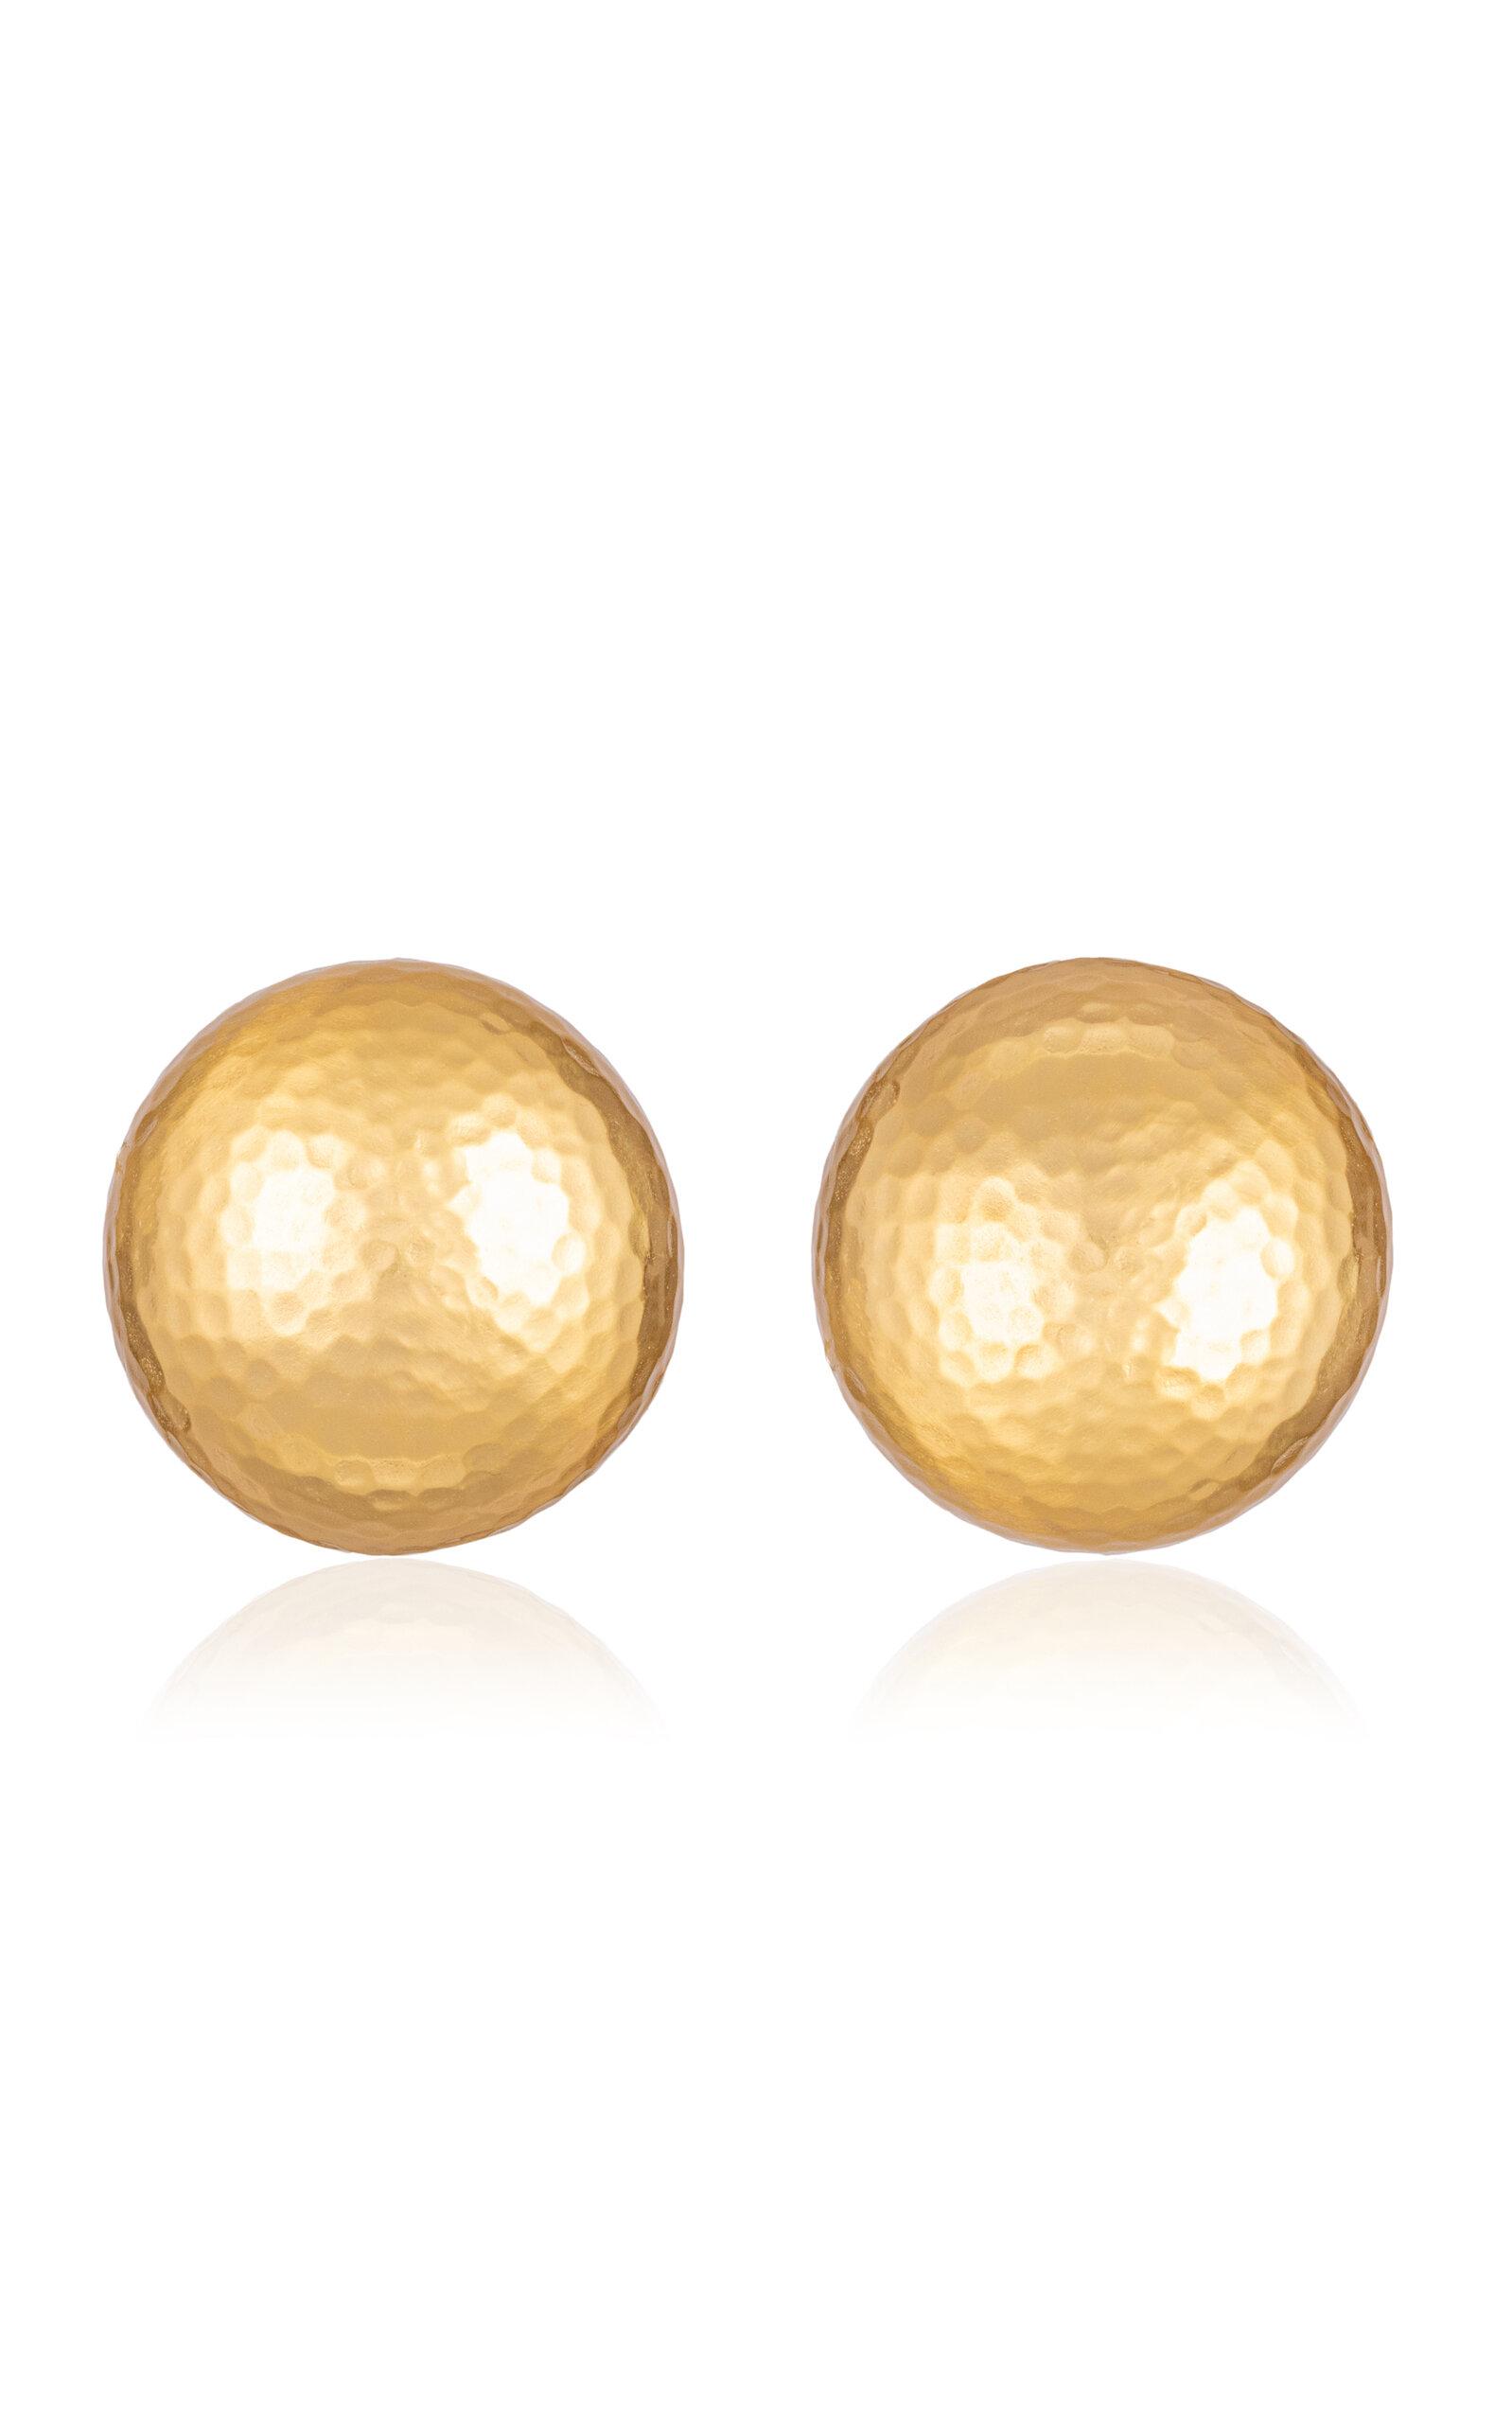 Discover Tweek Earrings Left Round 24k gold here